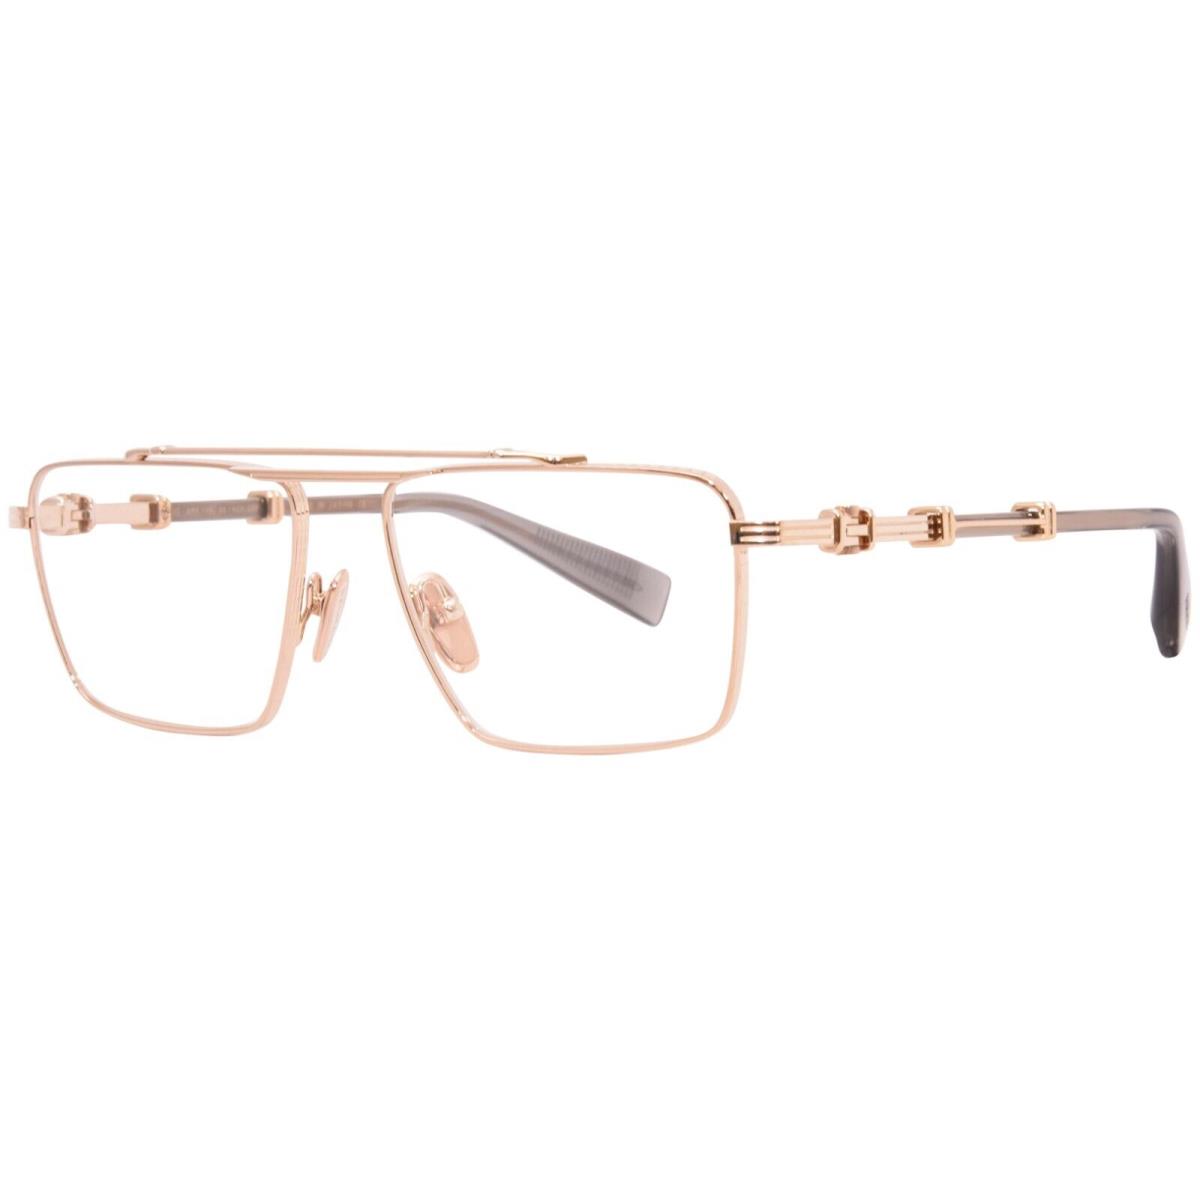 Balmain Eyeglasses Brigade VI Rose Gold Full Rim Frame 56MM Rx-able